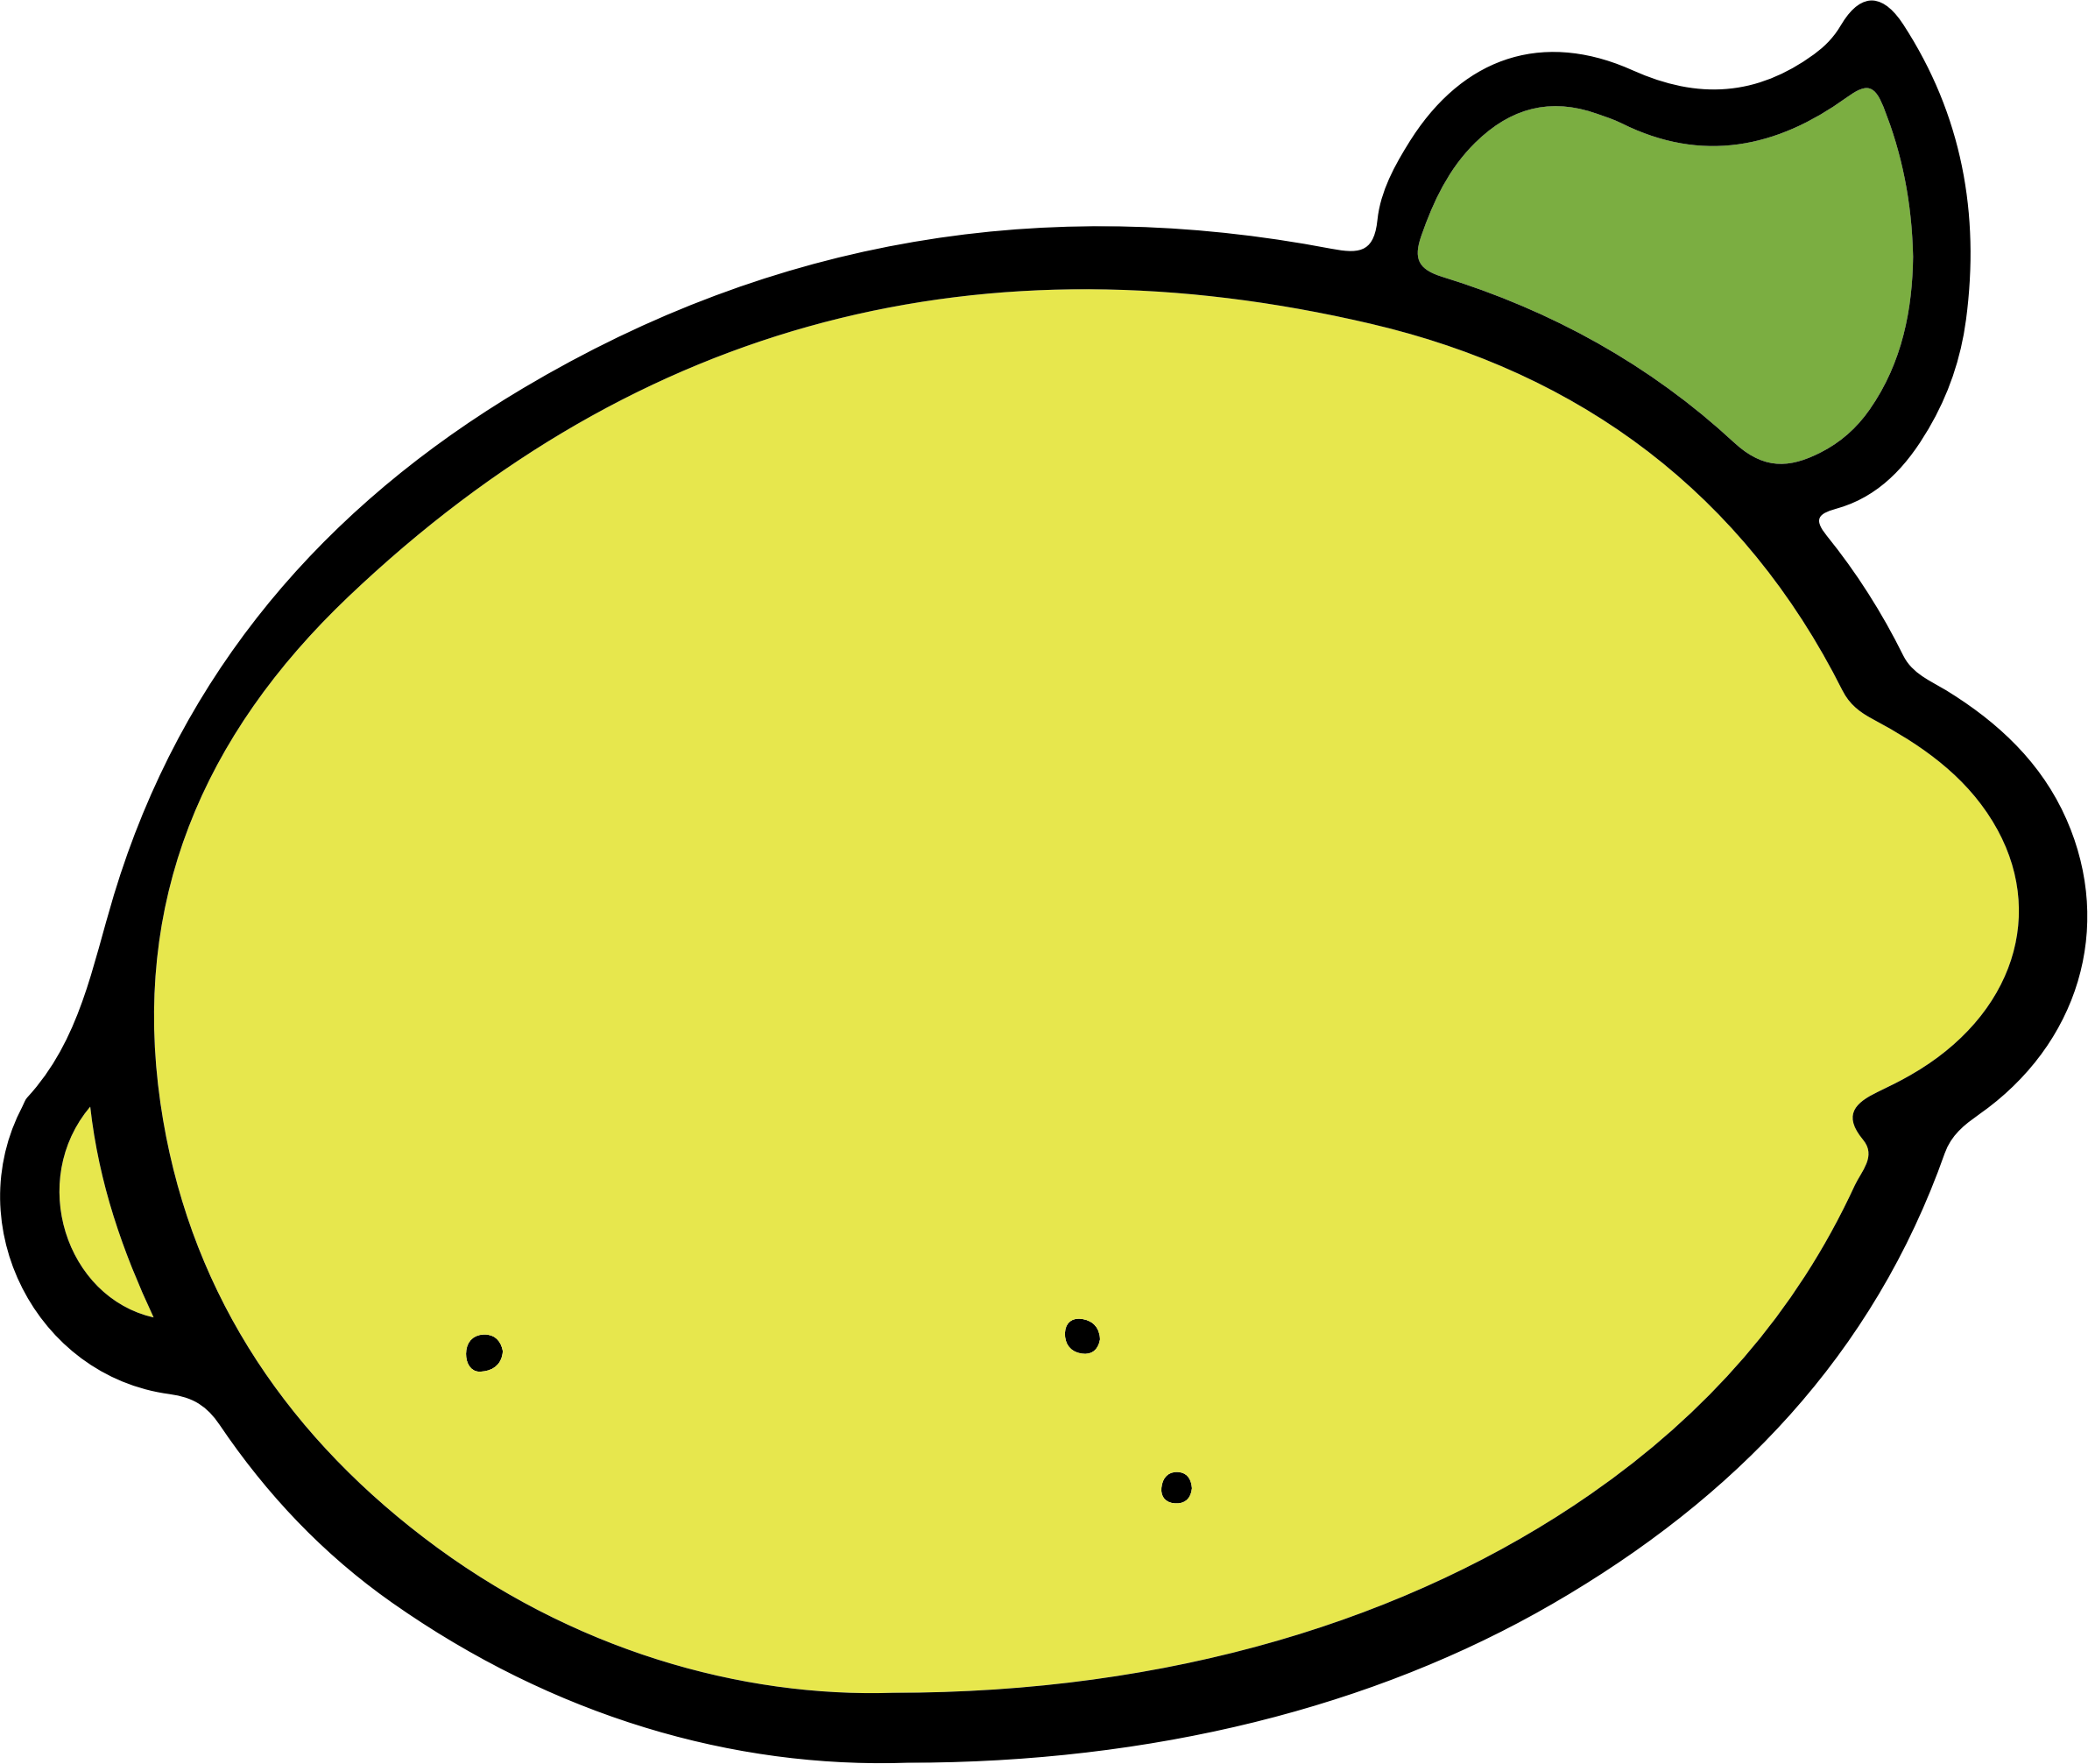 free clipart of lemon - photo #38